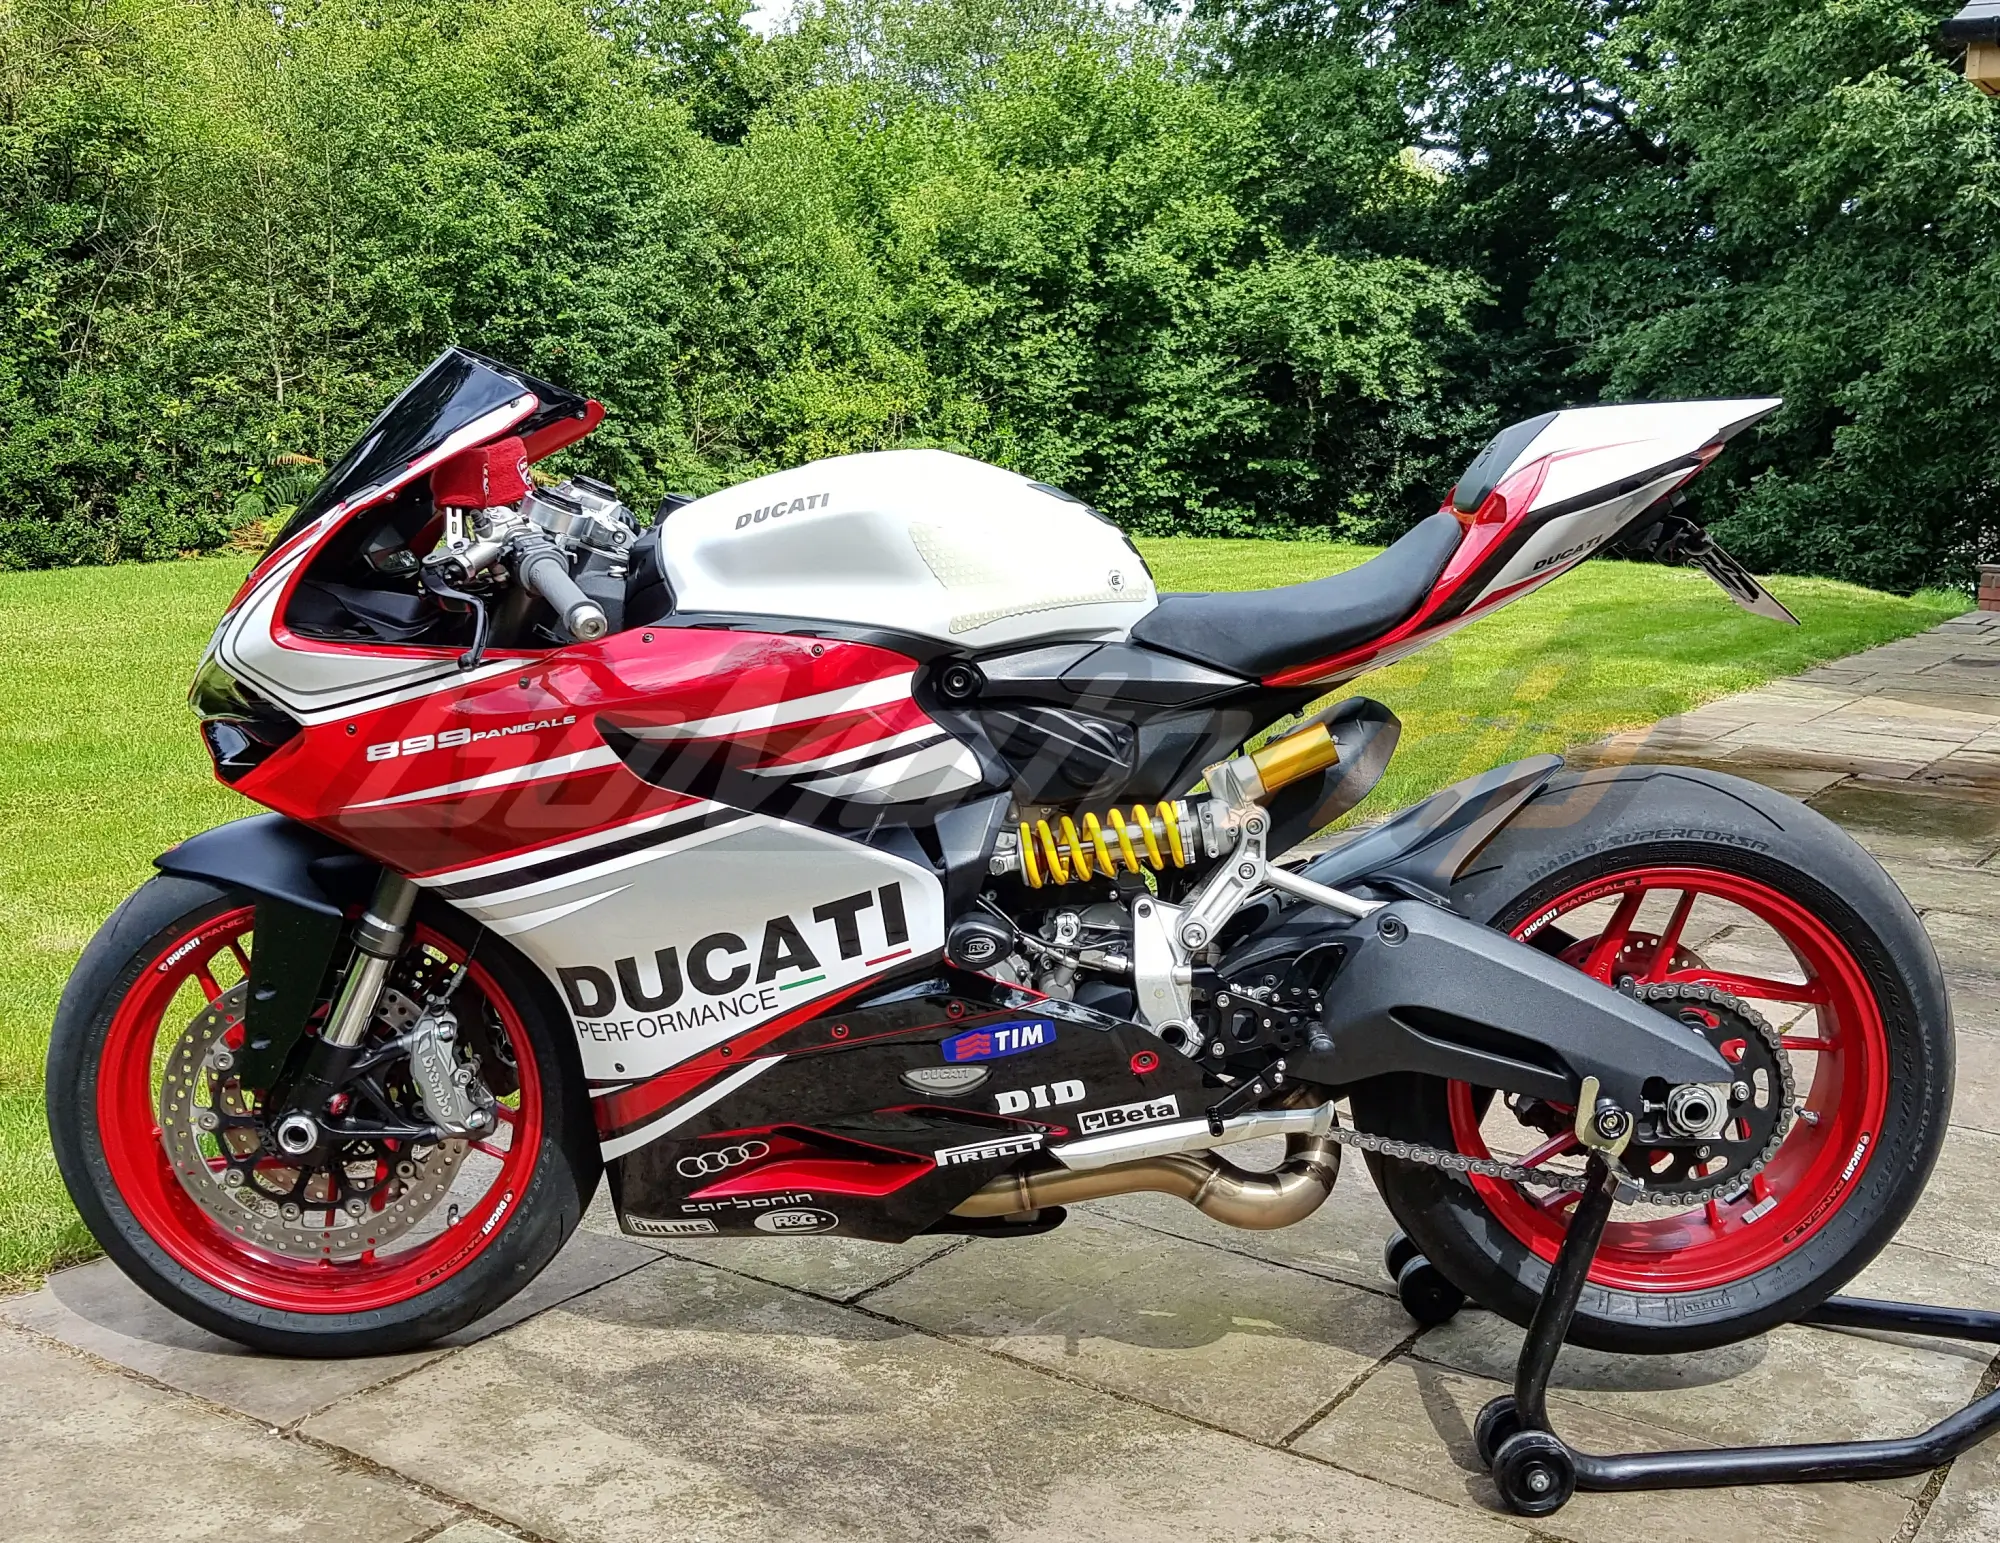 Rider-Review-Matthew-Ducati-899-Panigale-Titisan-Superbike-Concept-Fairing